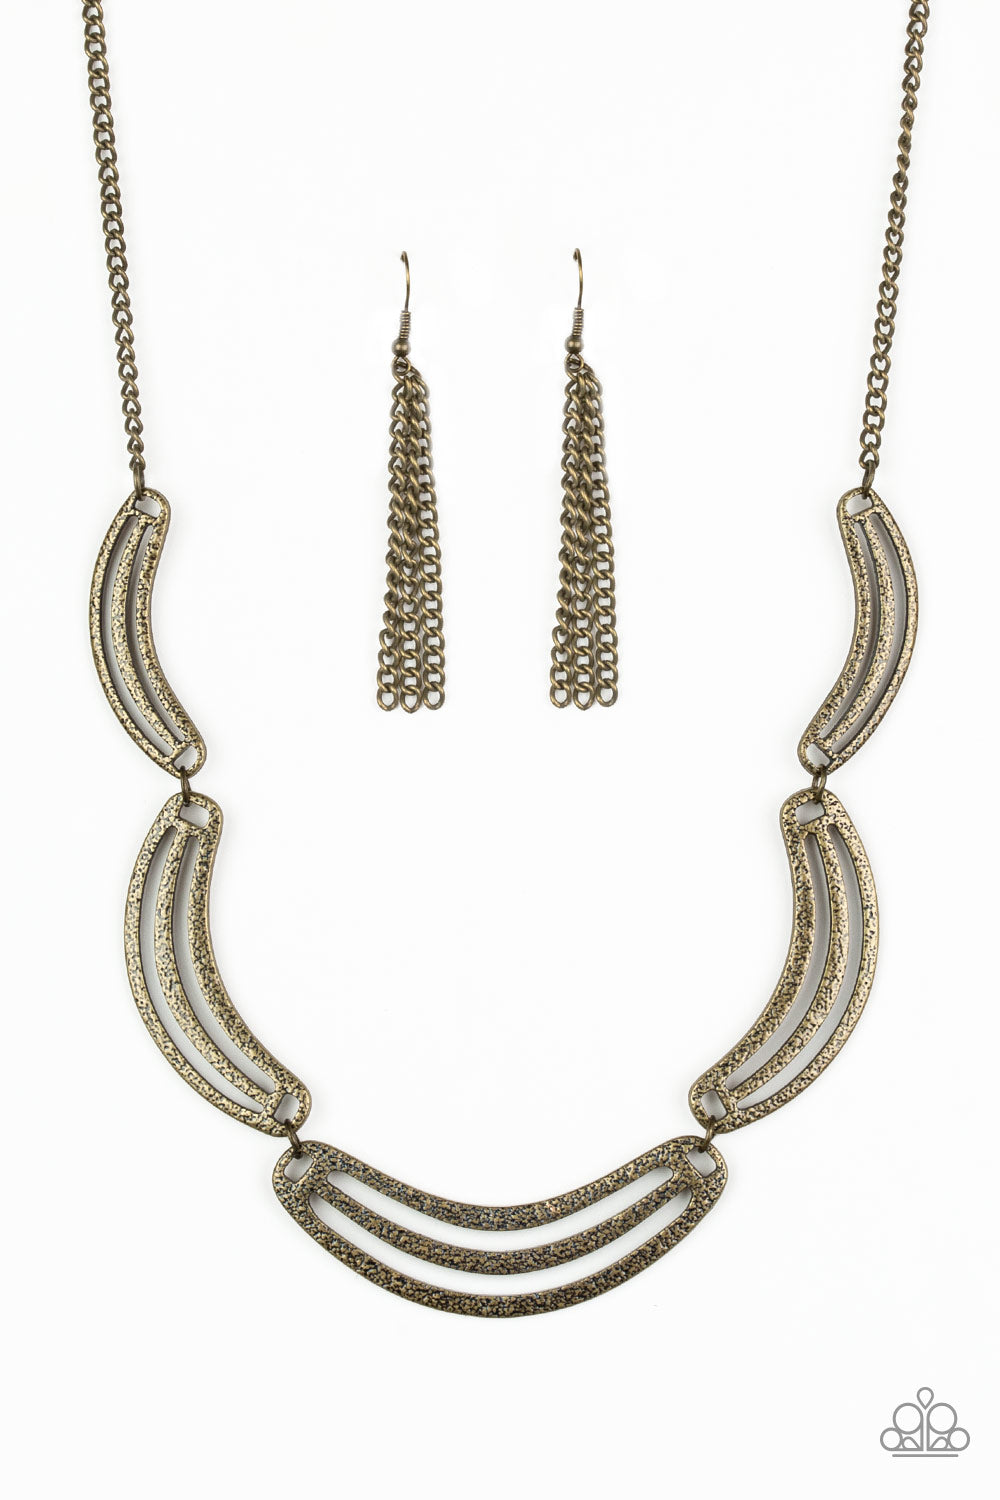 Palm Springs Pharaoh - Brass Necklace Set - Princess Glam Shop